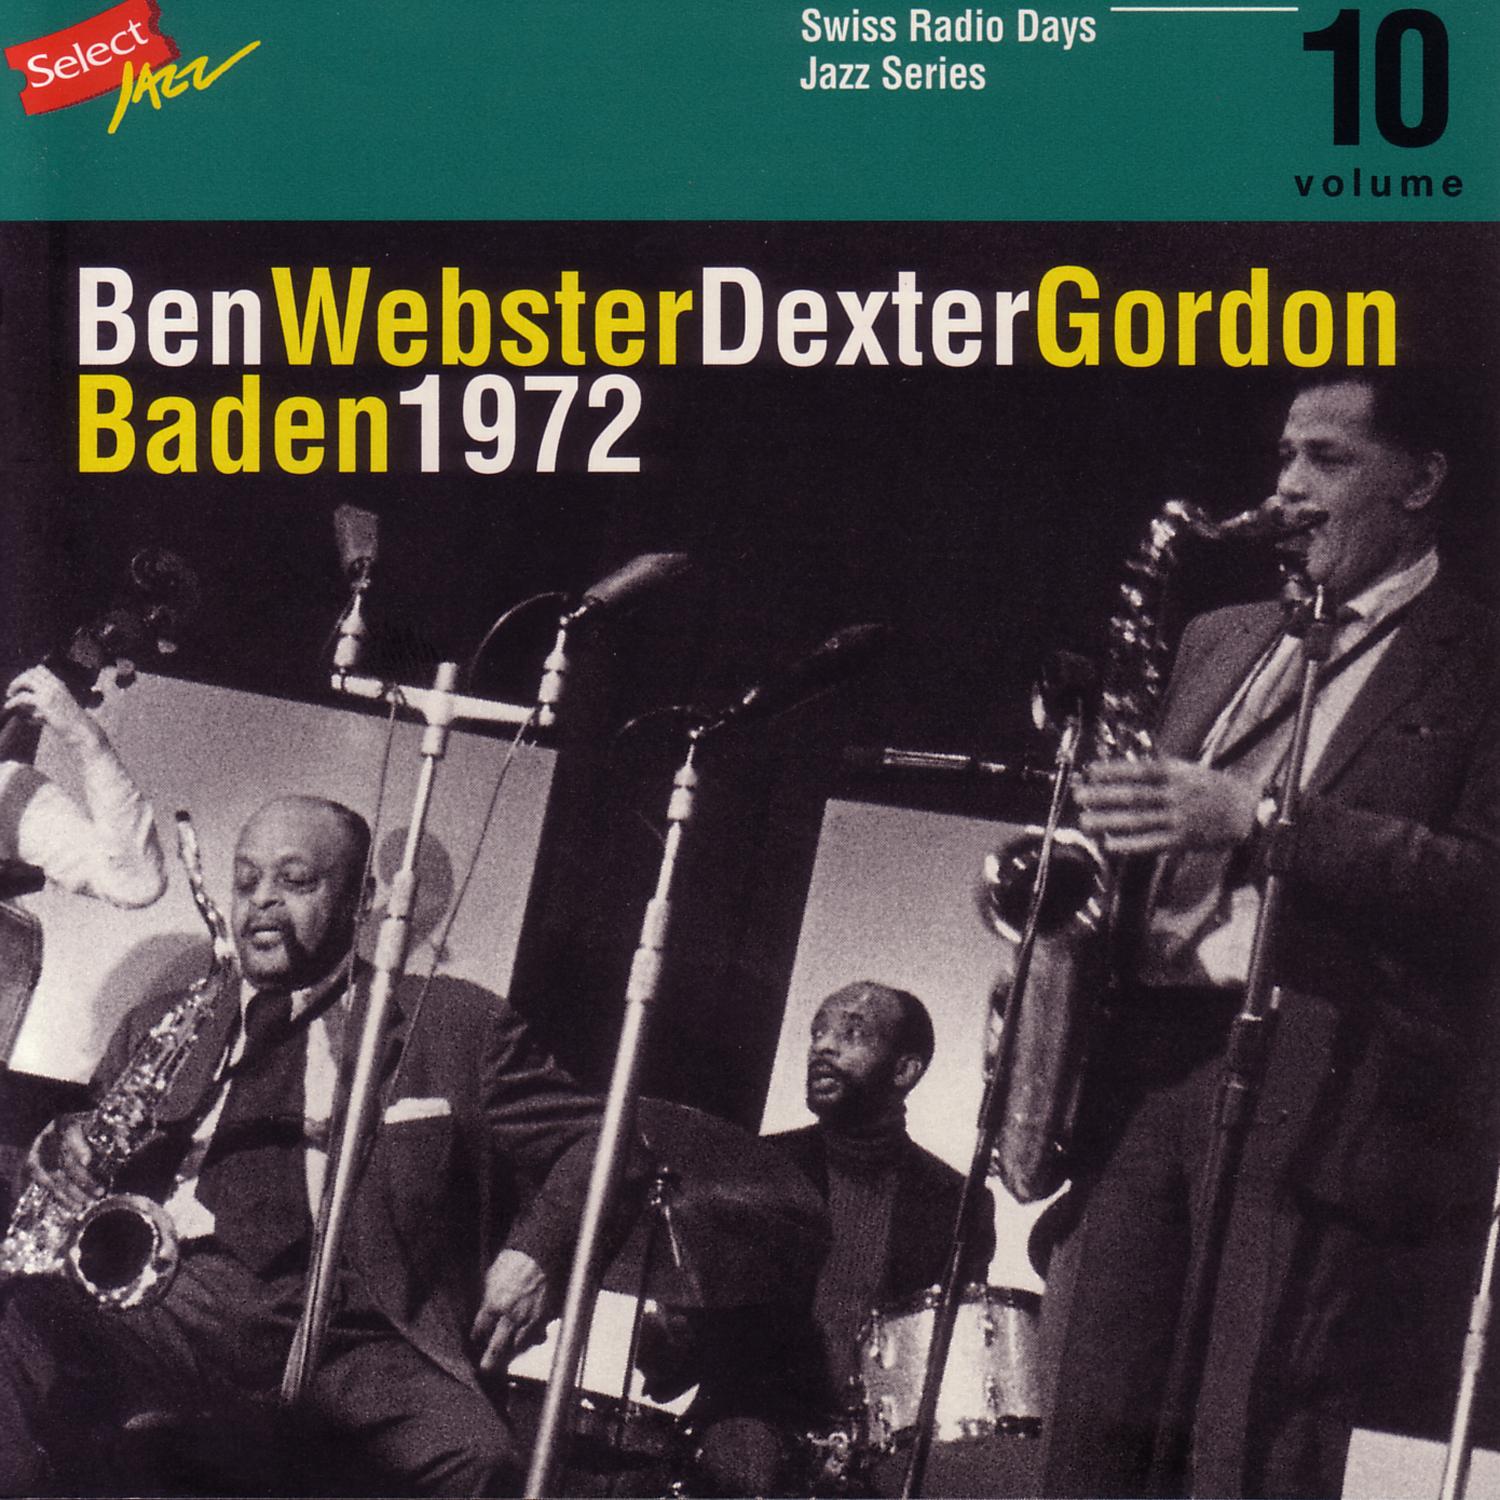 toast Radiate merger Ben Webster - Dexter Gordon, Baden 1972 / Swiss Radio Days, Jazz Series  Vol.10 | Alexander Street, a ProQuest Company